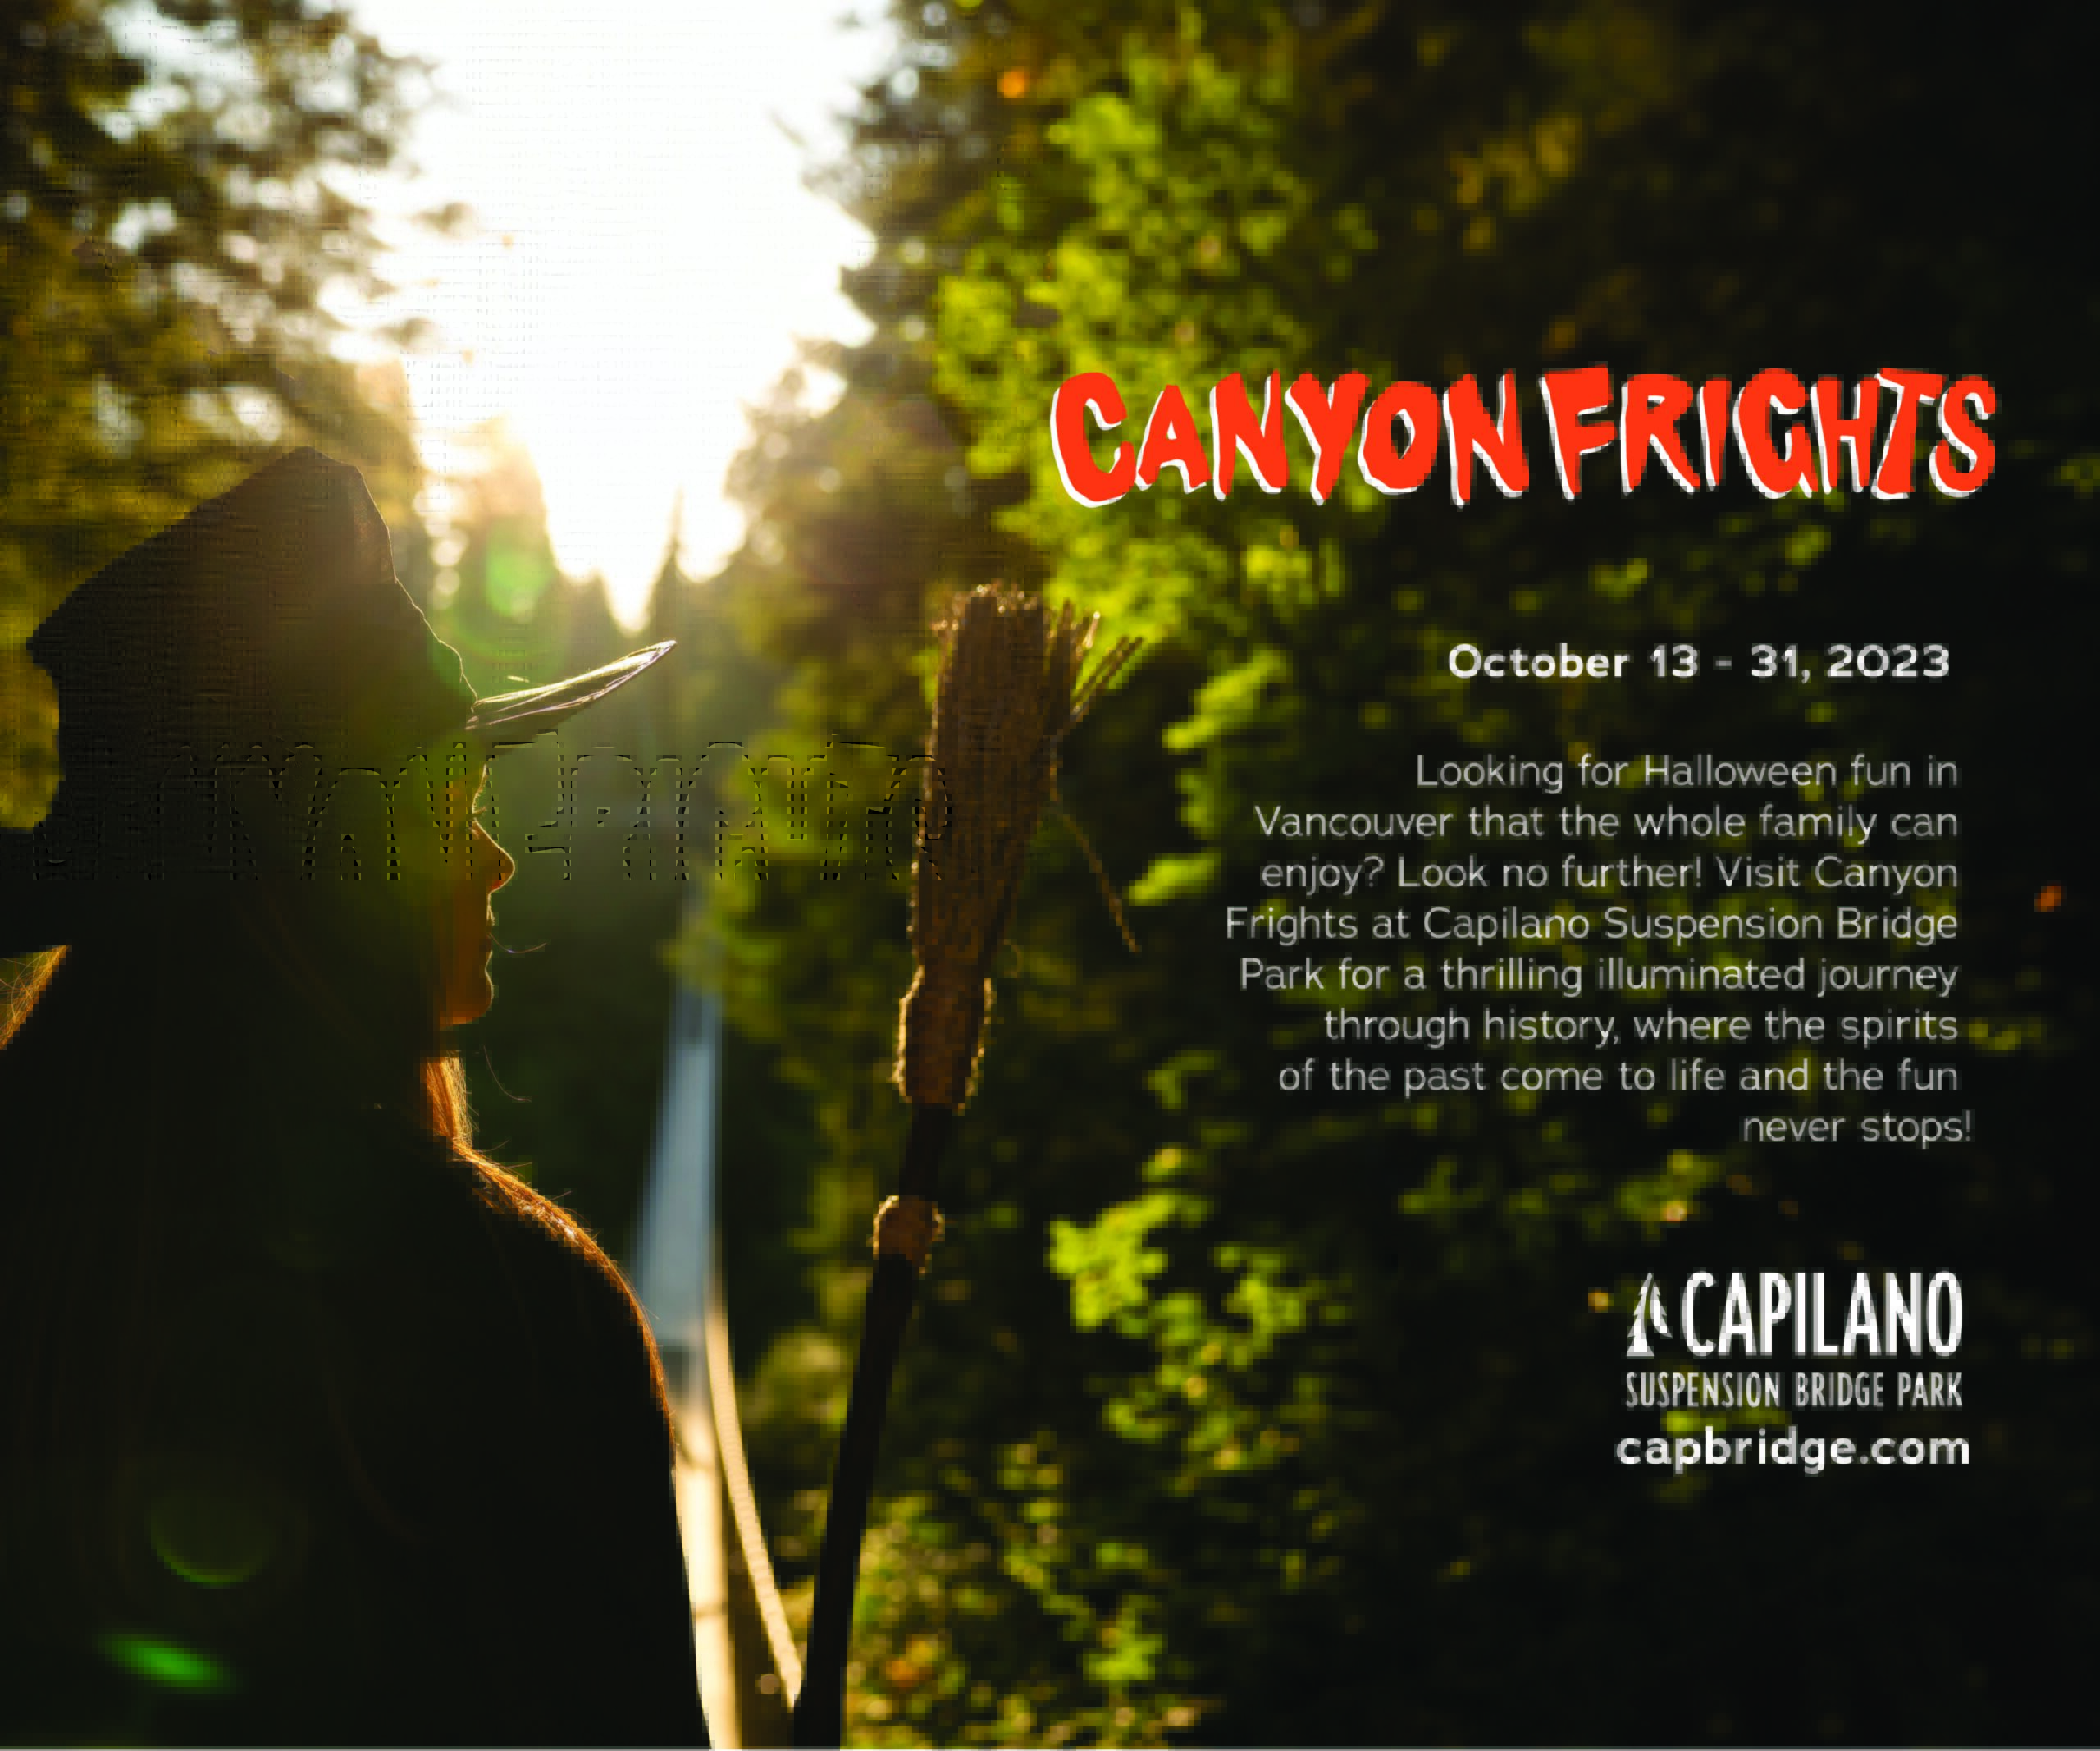 Canyon Frights на подвесном мосту Капилано, Хэллоуин 2023 г.